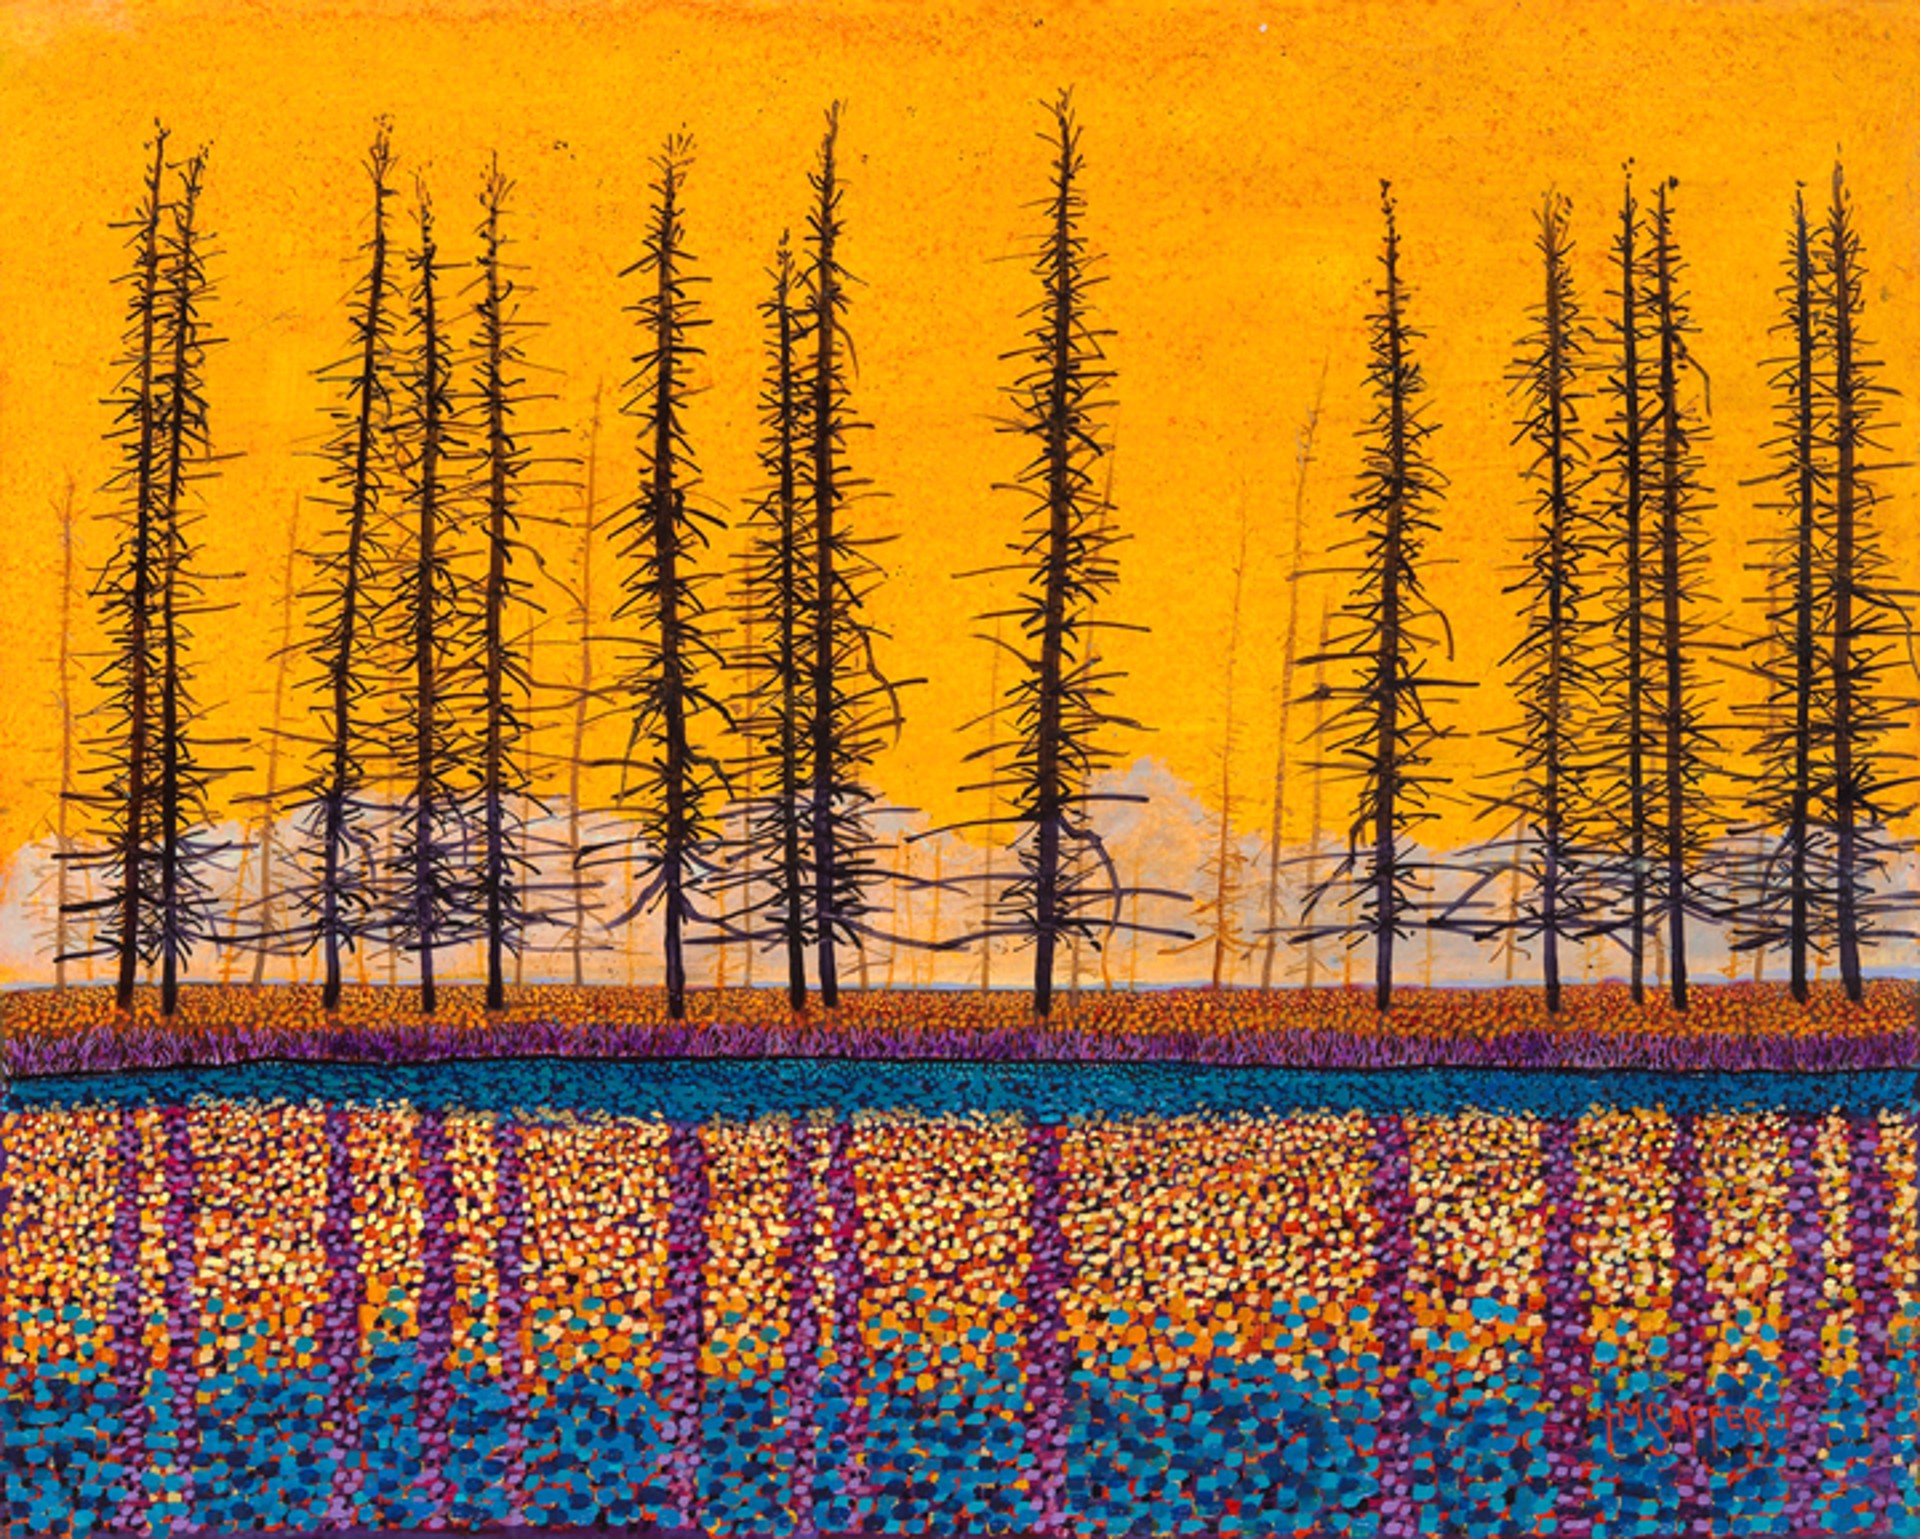 Woodland Twilight lV by H. M. Saffer II